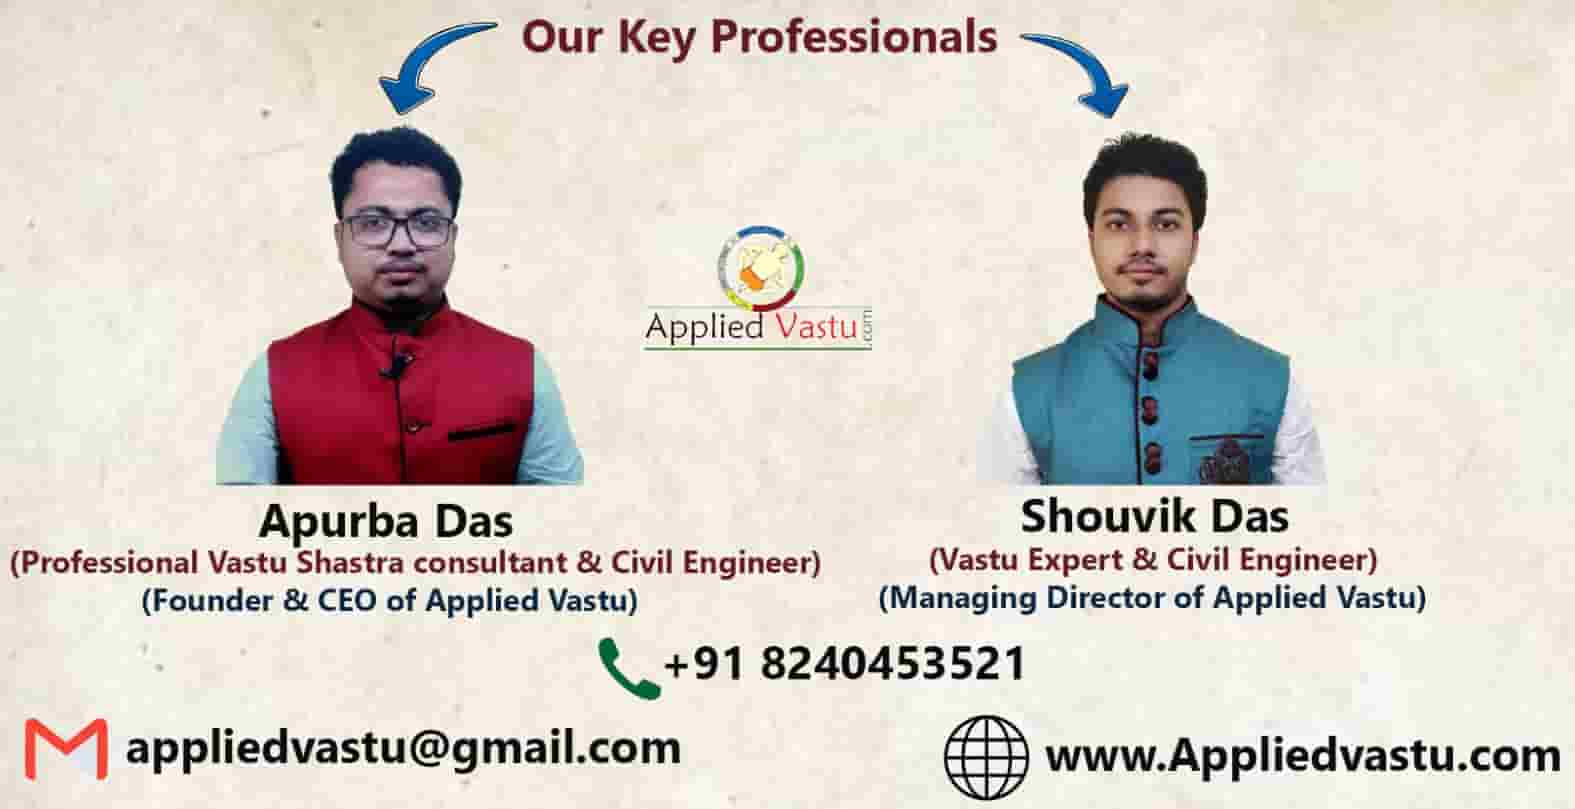 Applied vastu-vastu-shastra-consultant- Appliedvastu - Apurba Das - Shouvik Das-Civil engineer- Architect - Vastu Expert